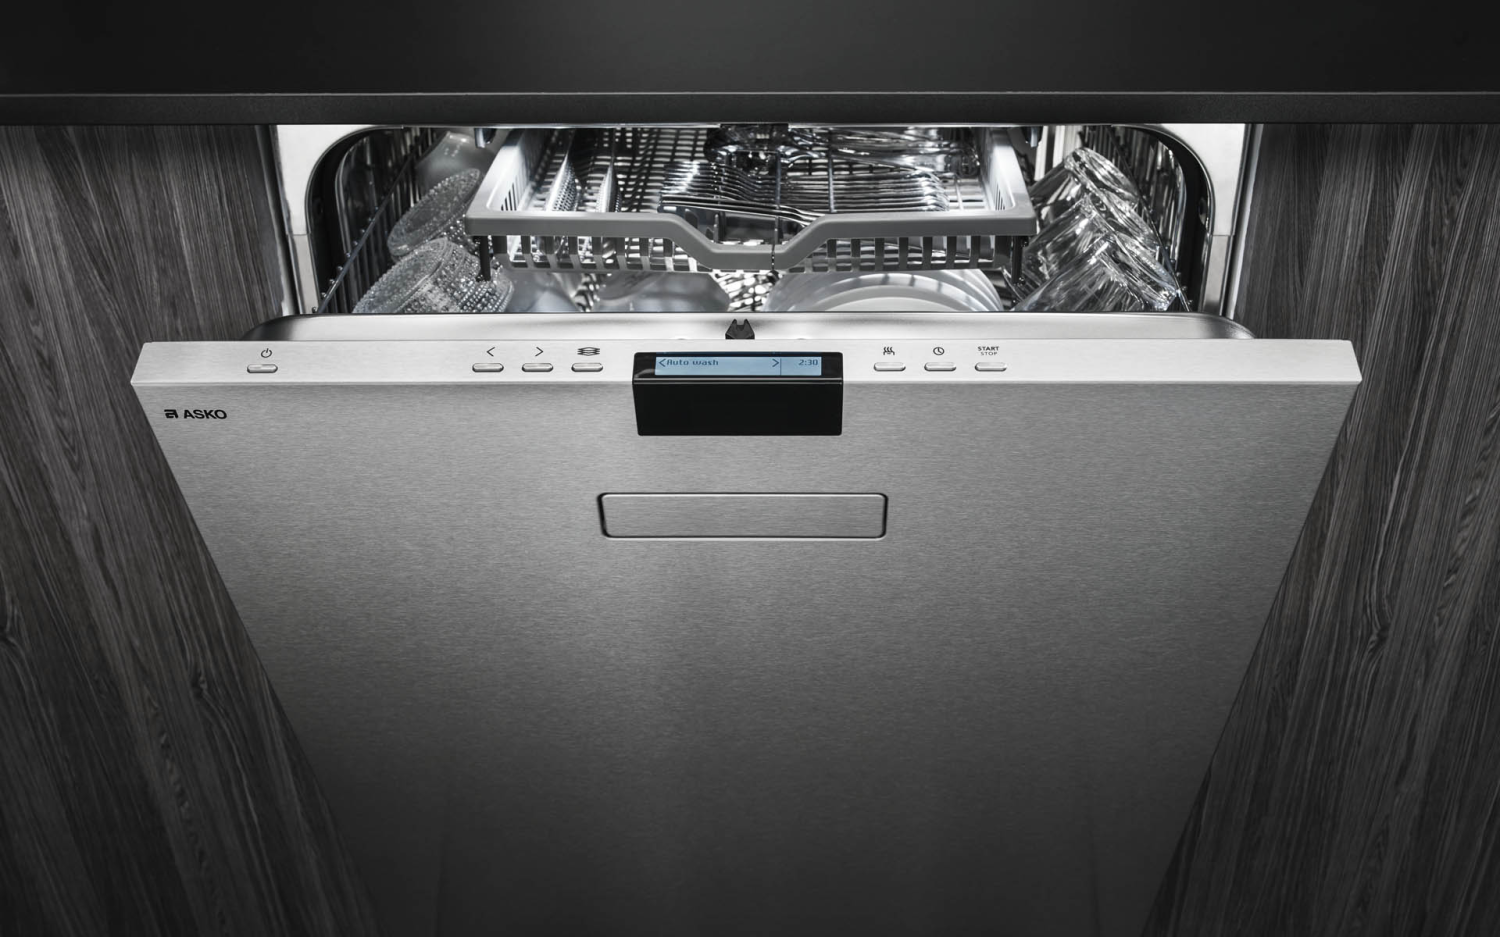 Asko - 40 dBA Built In Dishwasher in Panel Ready - DFI675XXL